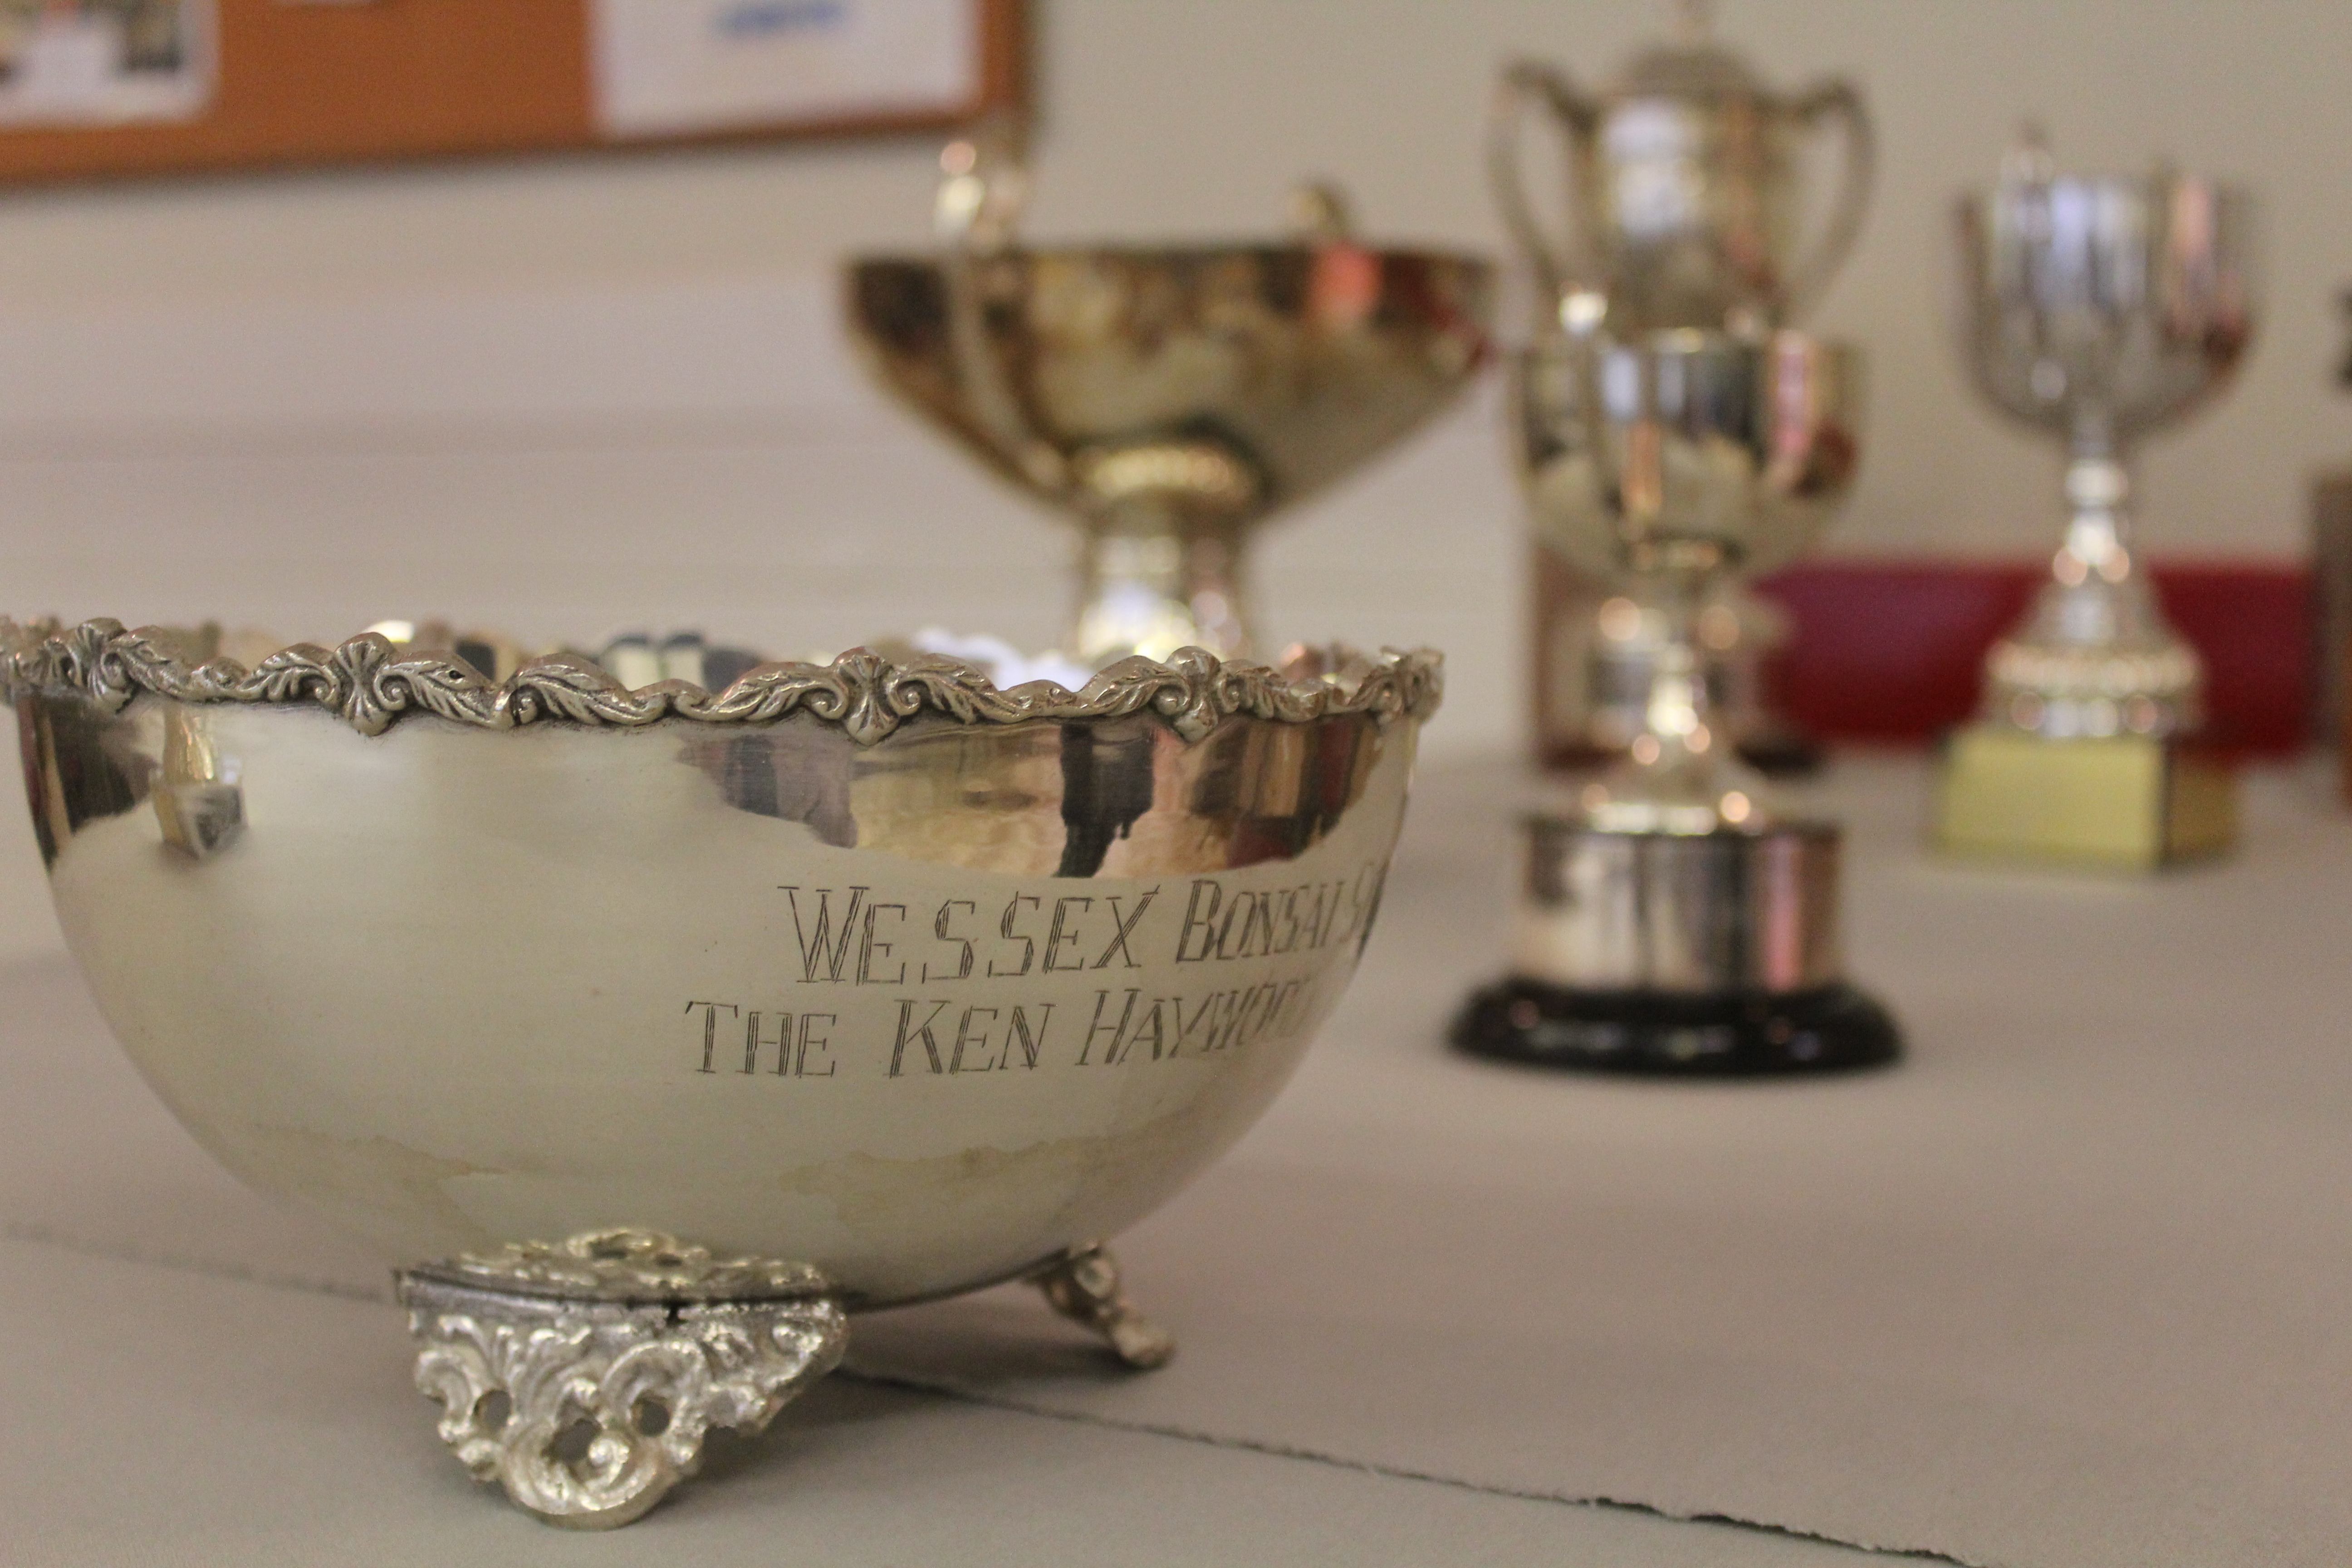 Wessex Bonsai Open Competition Trophy